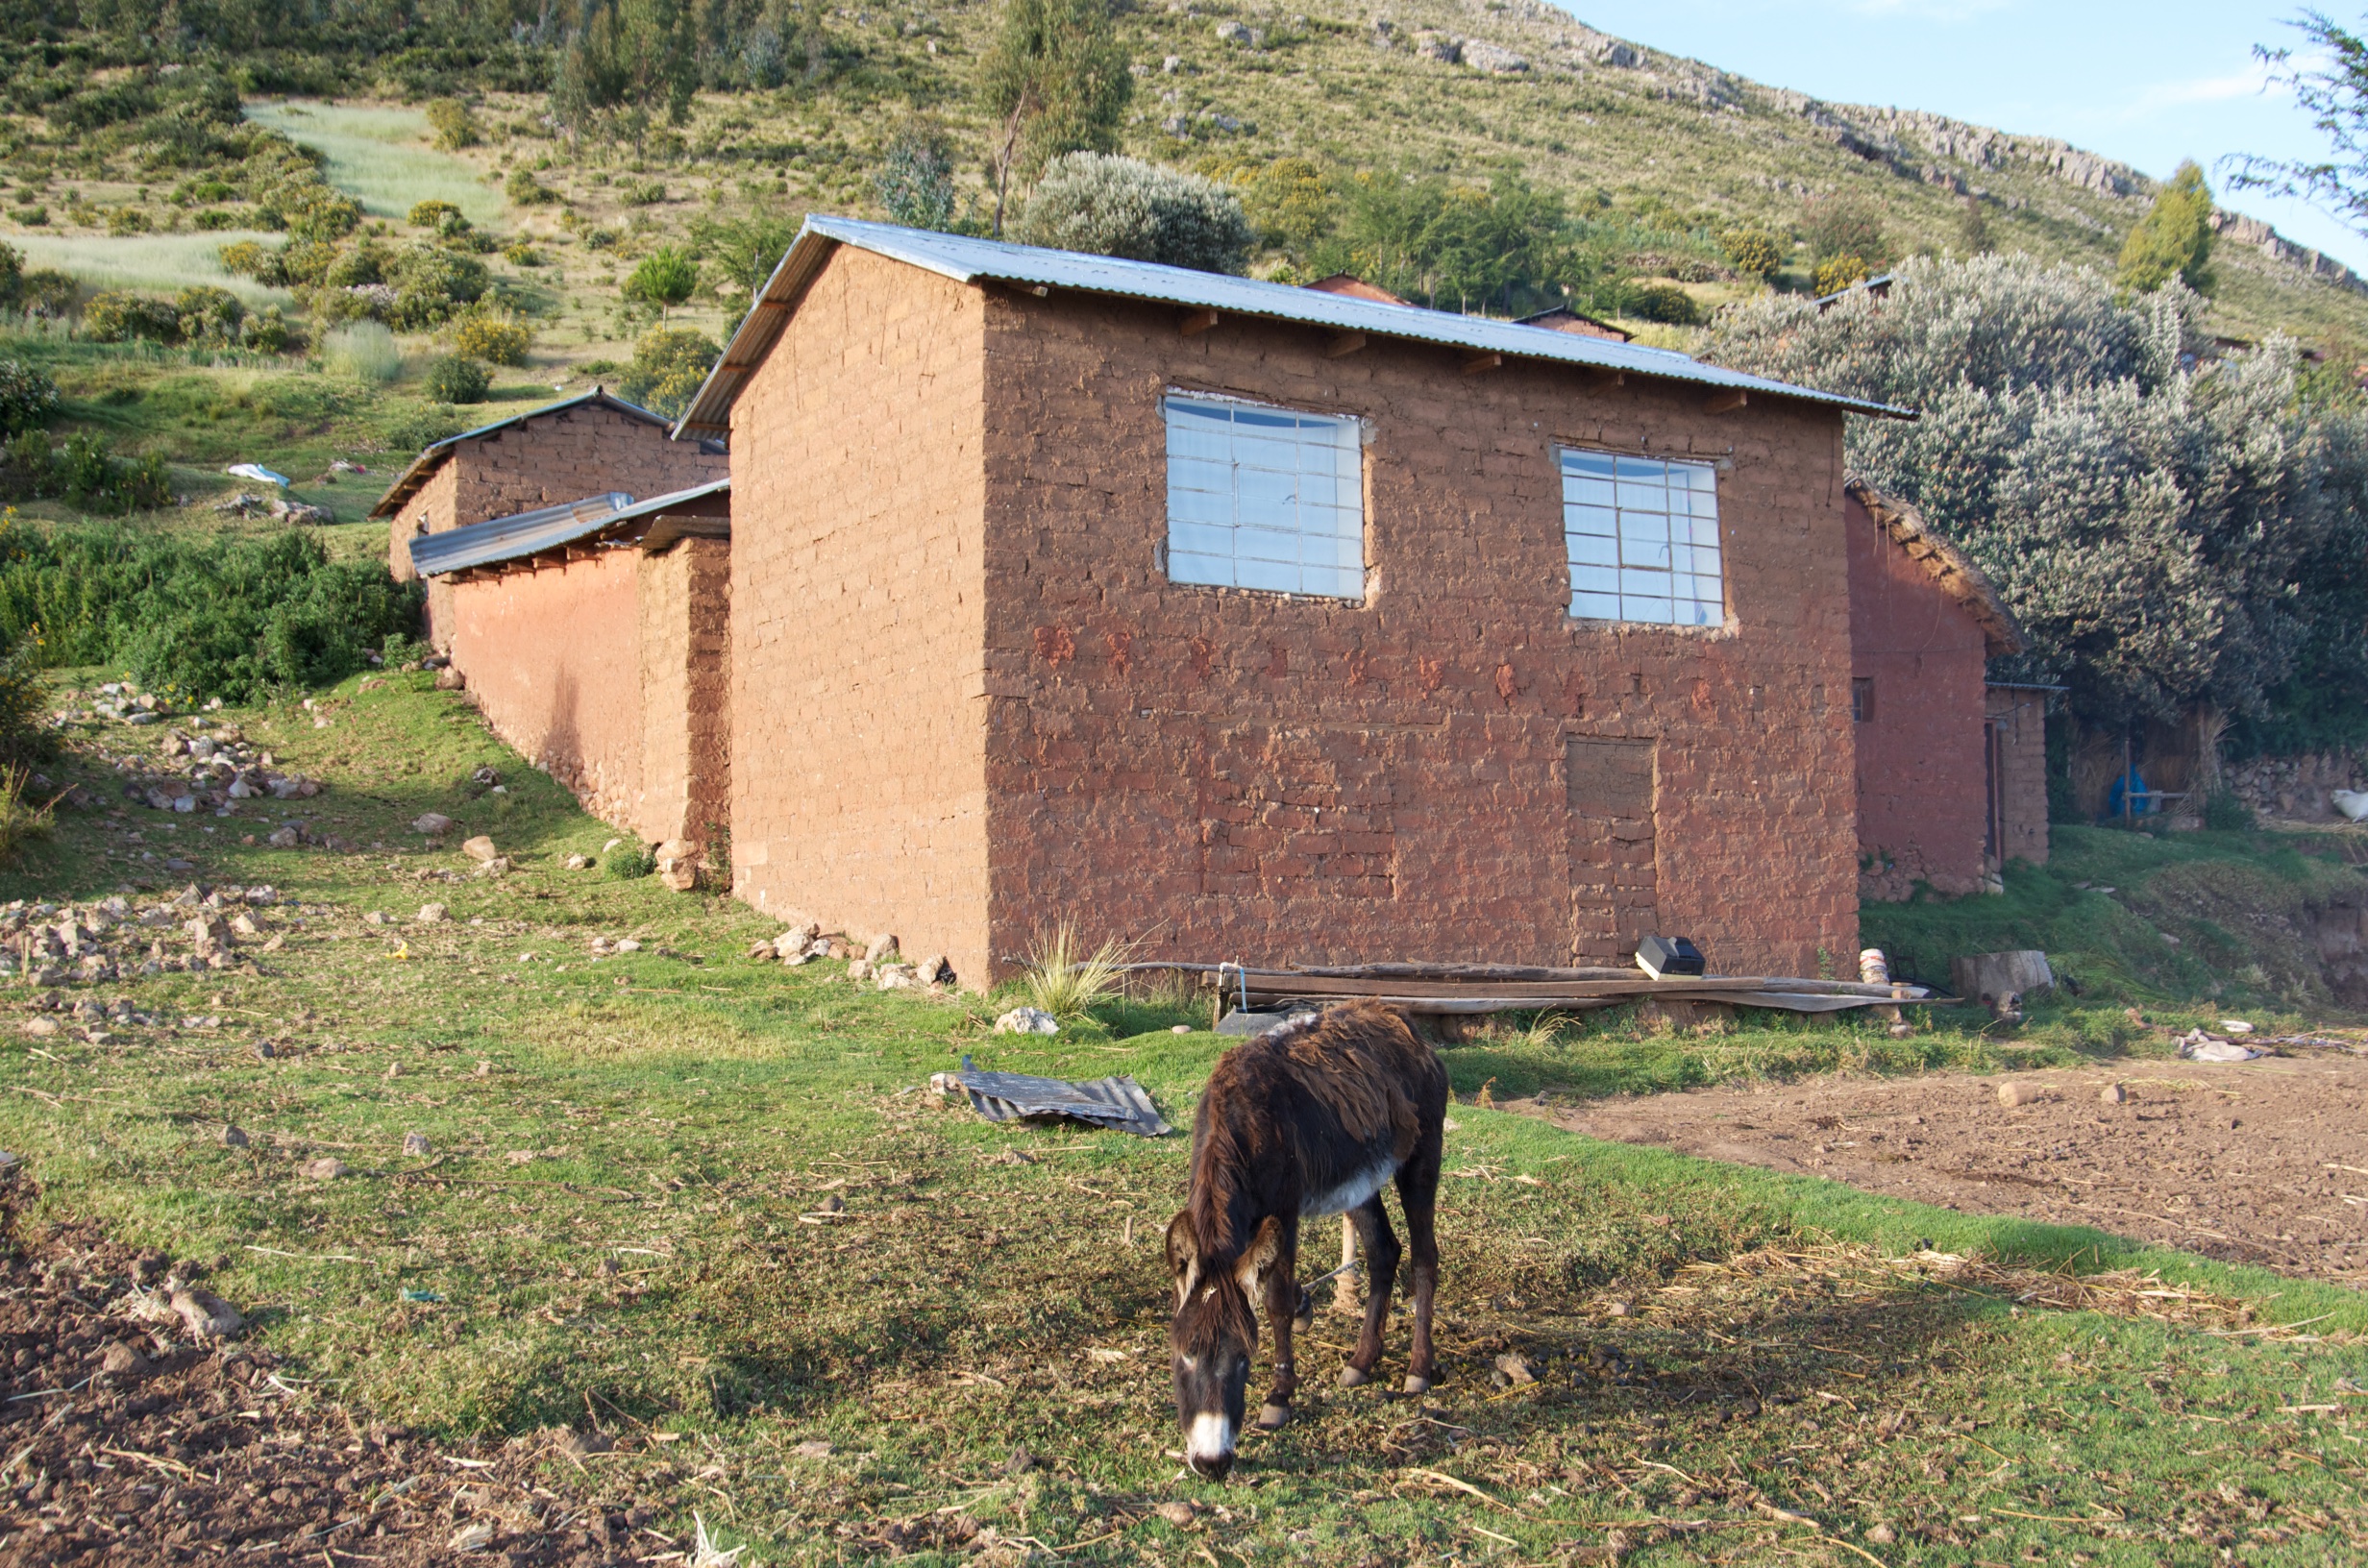  Burro, the donkey at homestay, Luquina Village, Lake Titicaca, Peru 